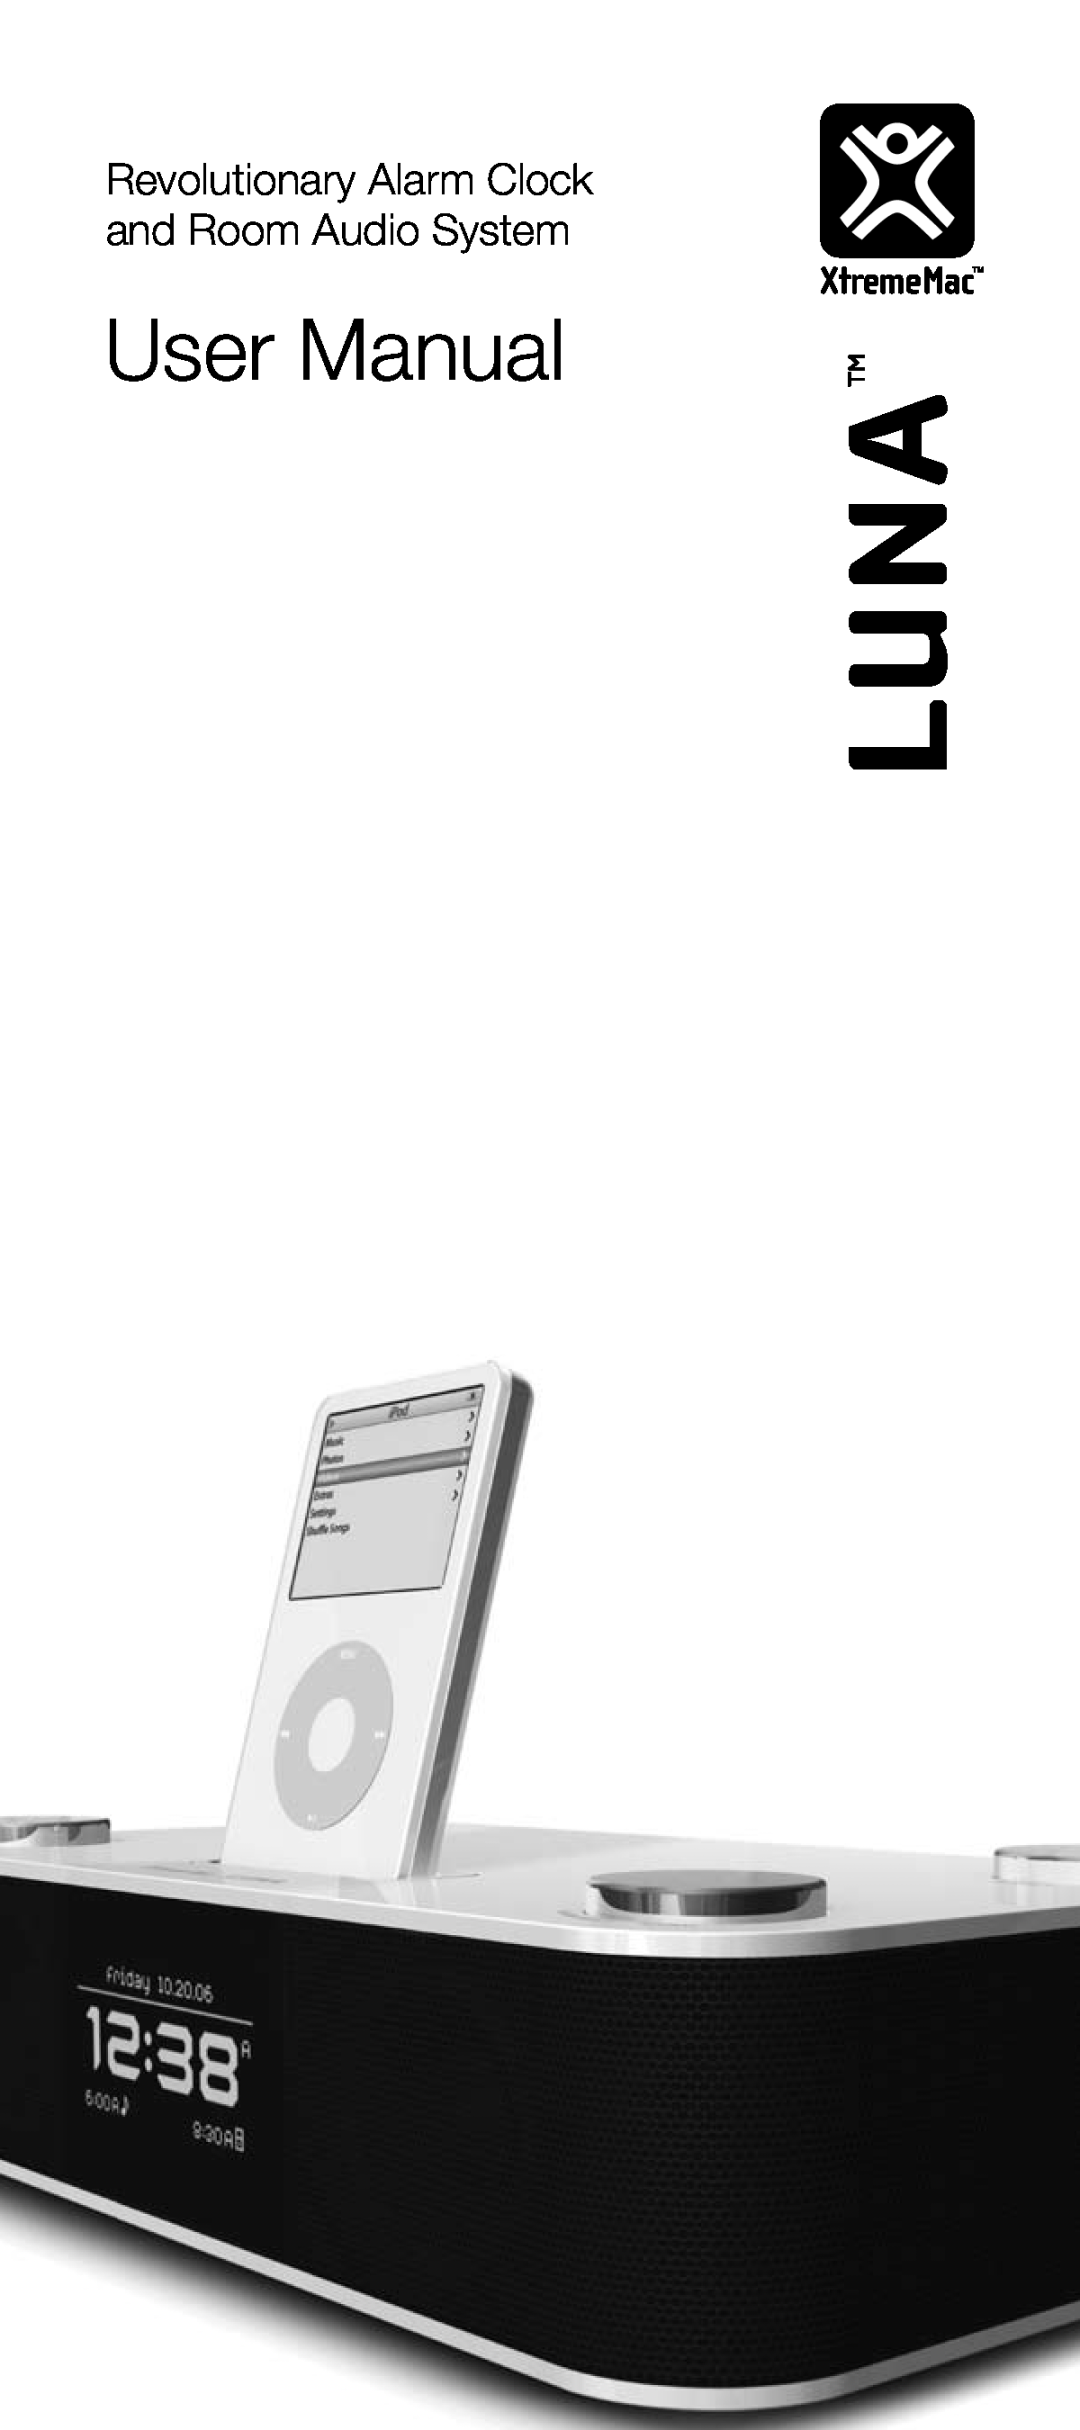 XtremeMac user manual User Manual, Revolutionary Alarm Clock and Room Audio System 